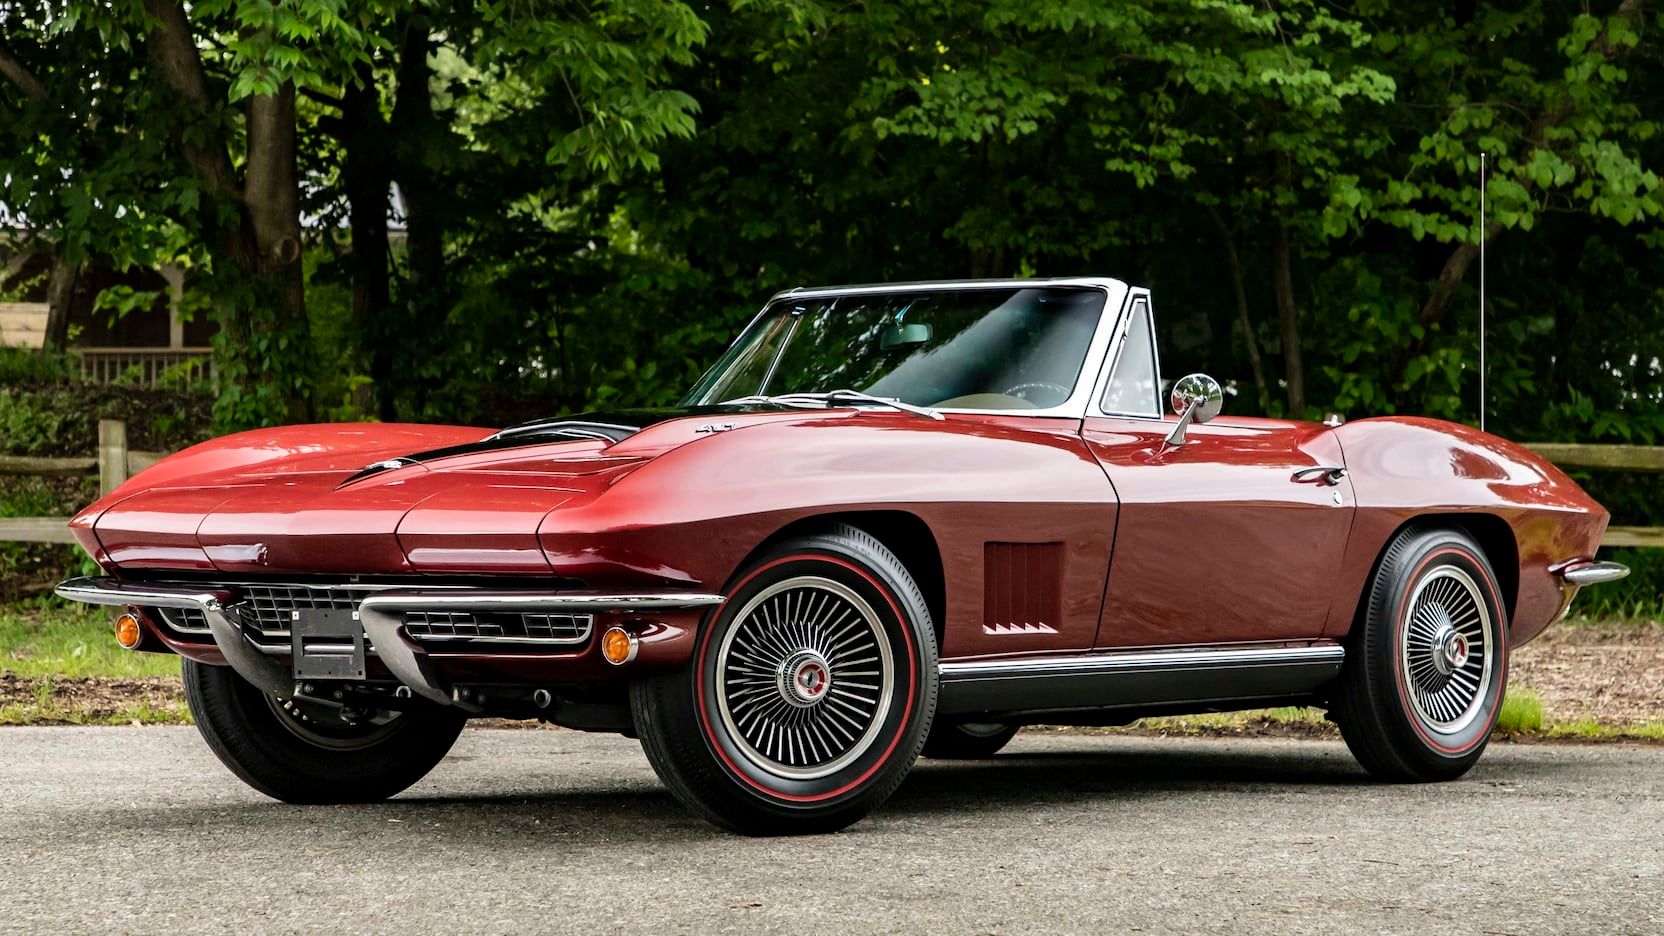 1967 427 Tri Power Corvette parked outside